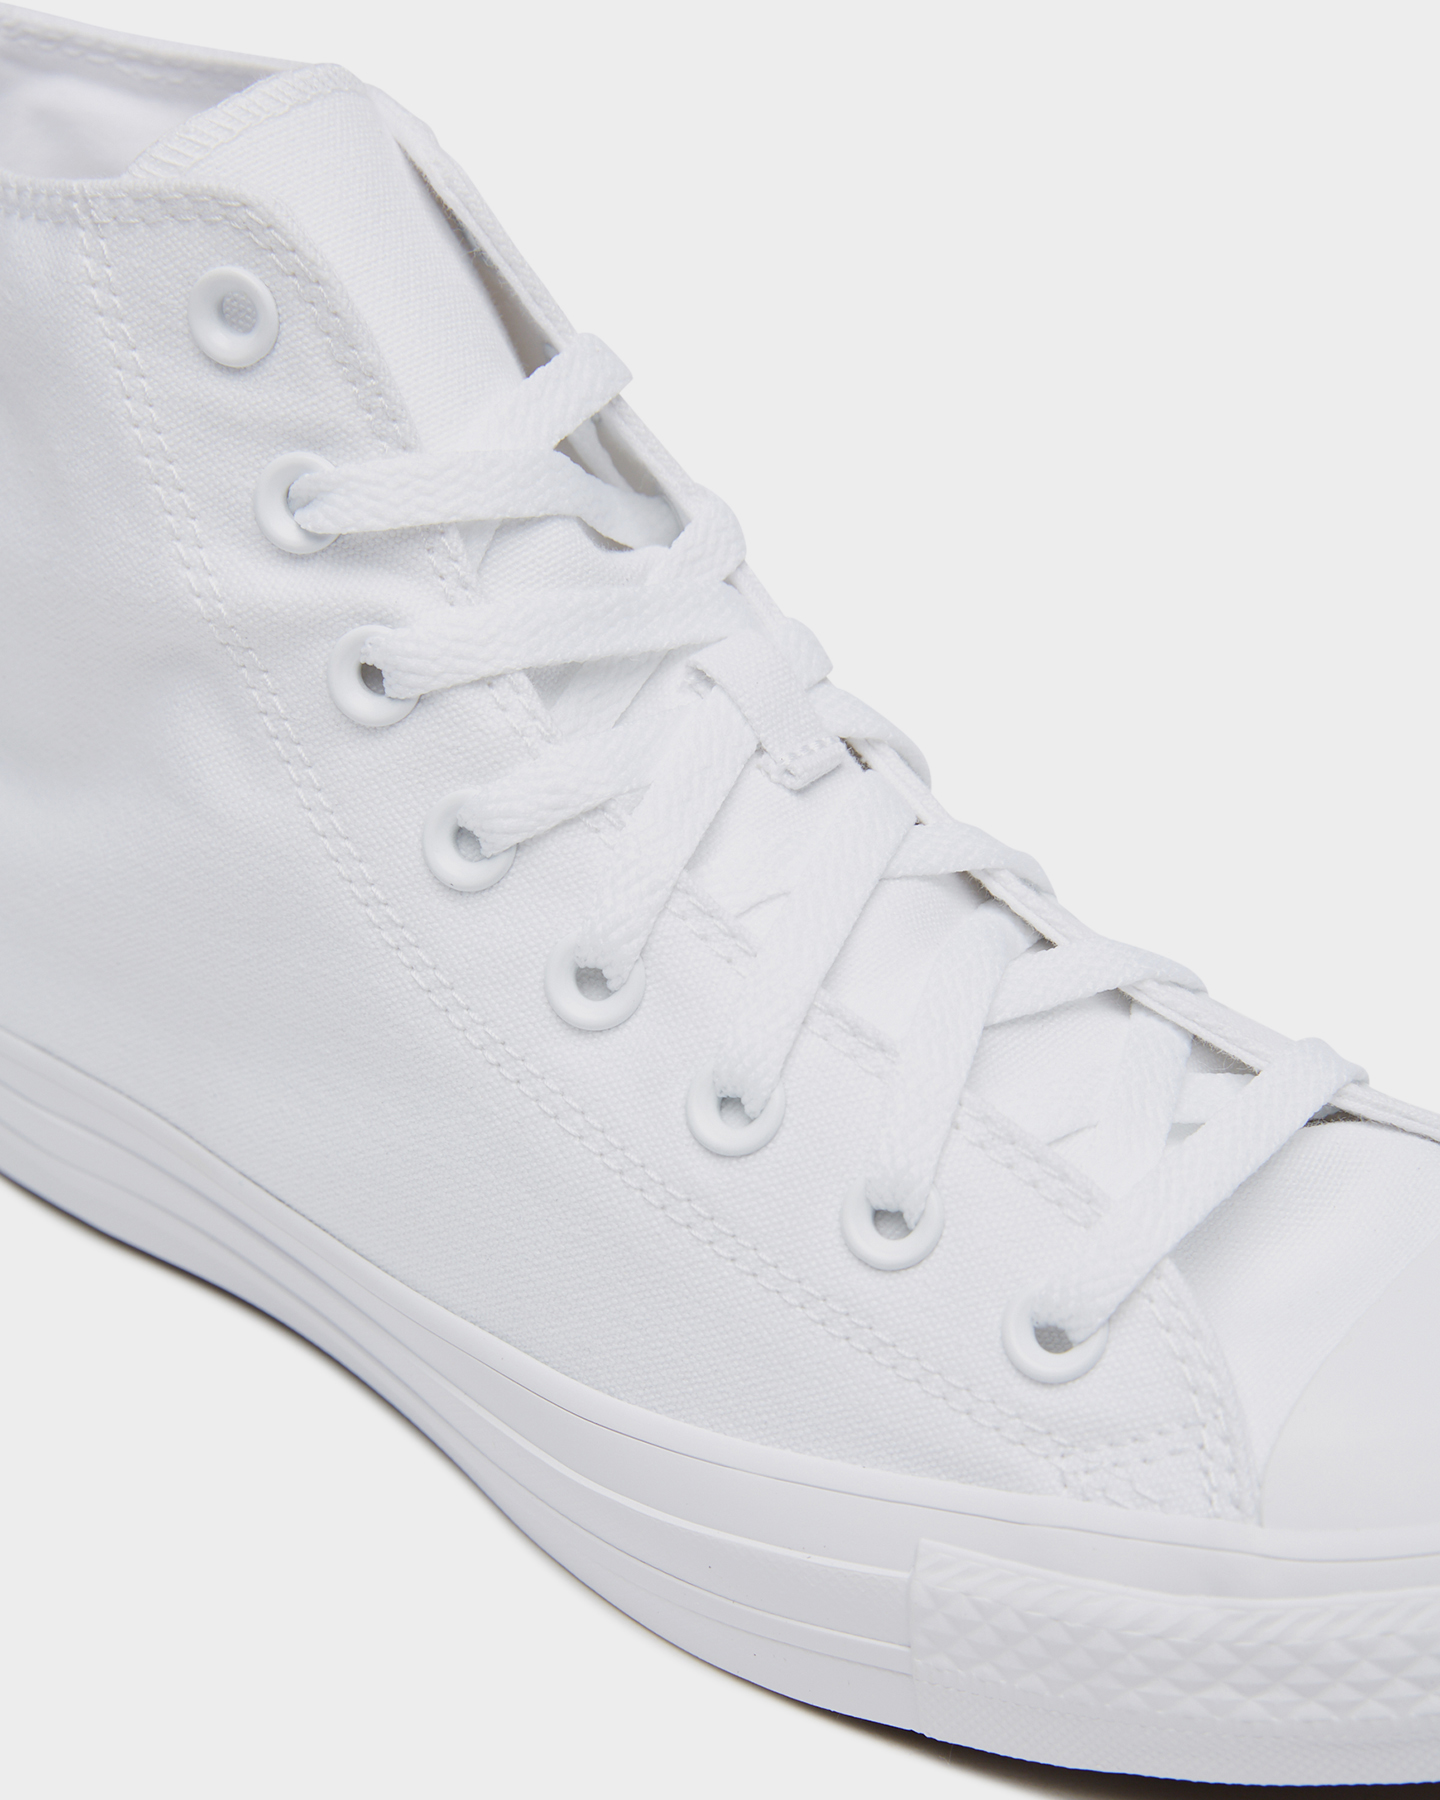 Converse Chuck Taylor All Star Hi Shoe - White Monochrome | SurfStitch